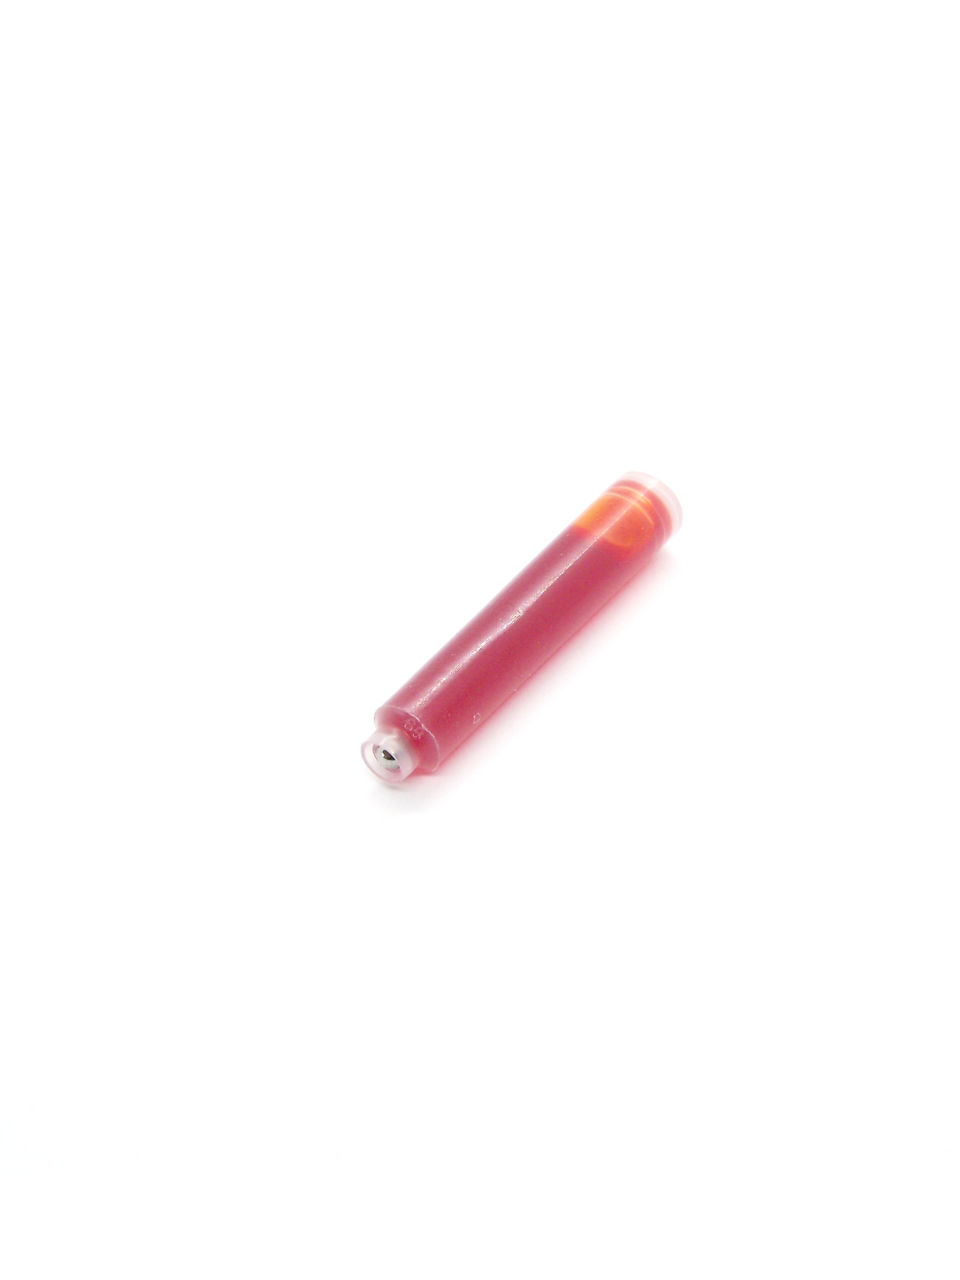 Cartridges For European Fountain Pens (Orange)